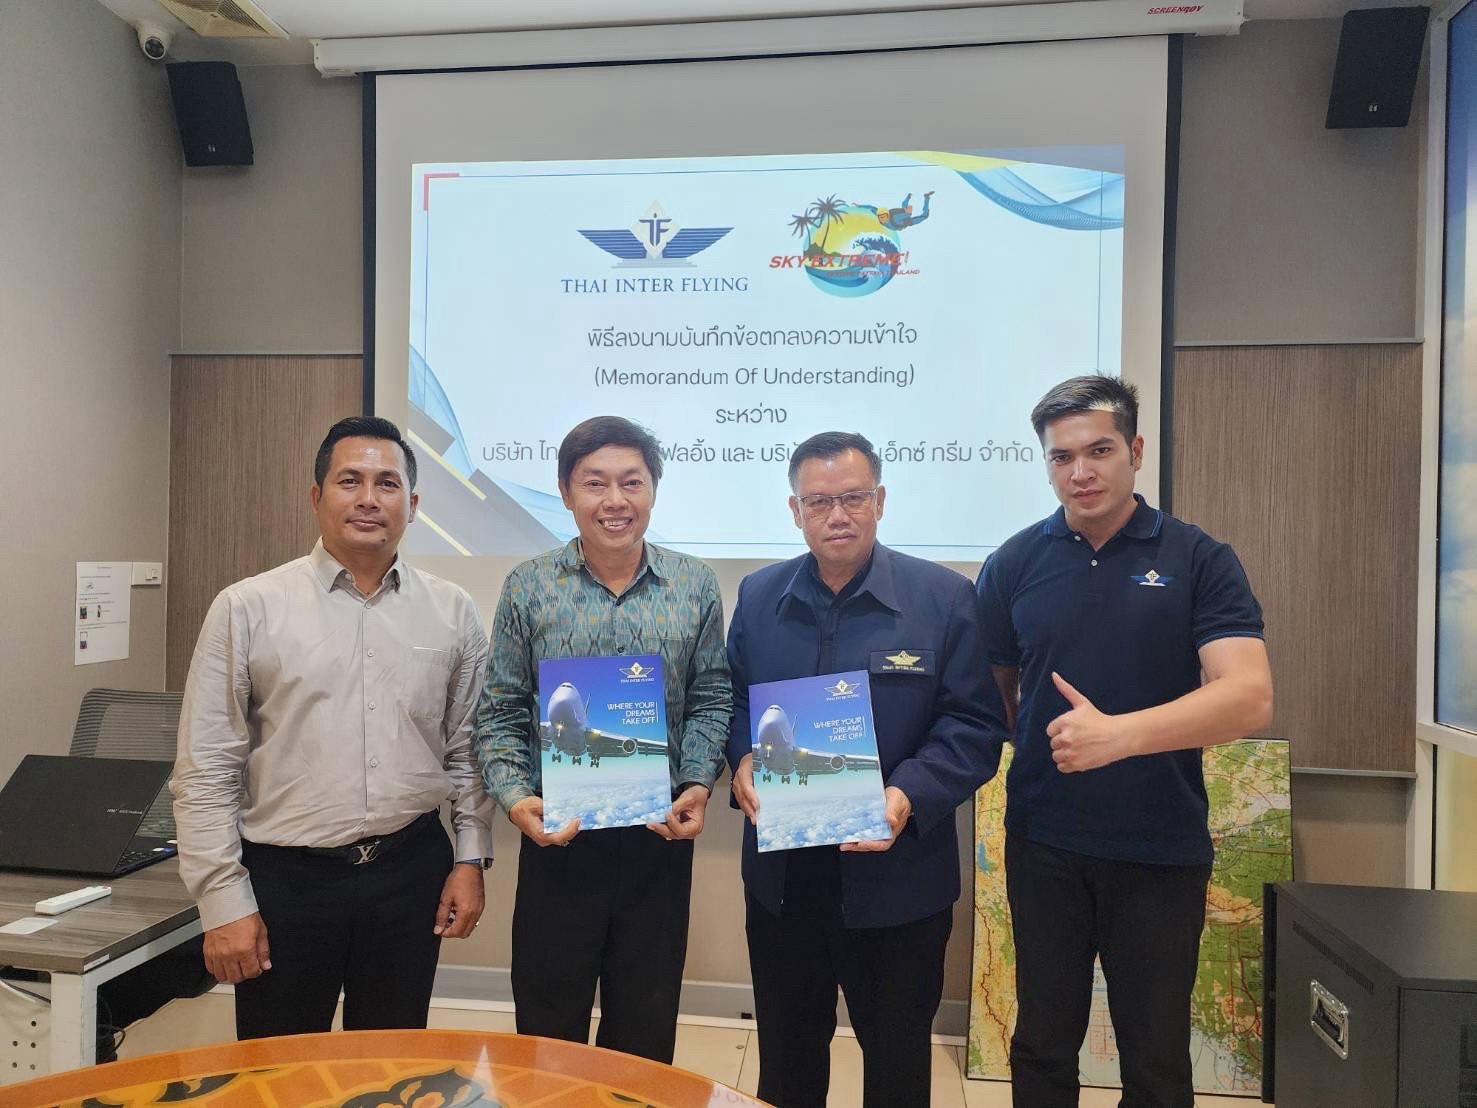 Thai Inter Flying Memorandum of Understanding with SKY EXTREME